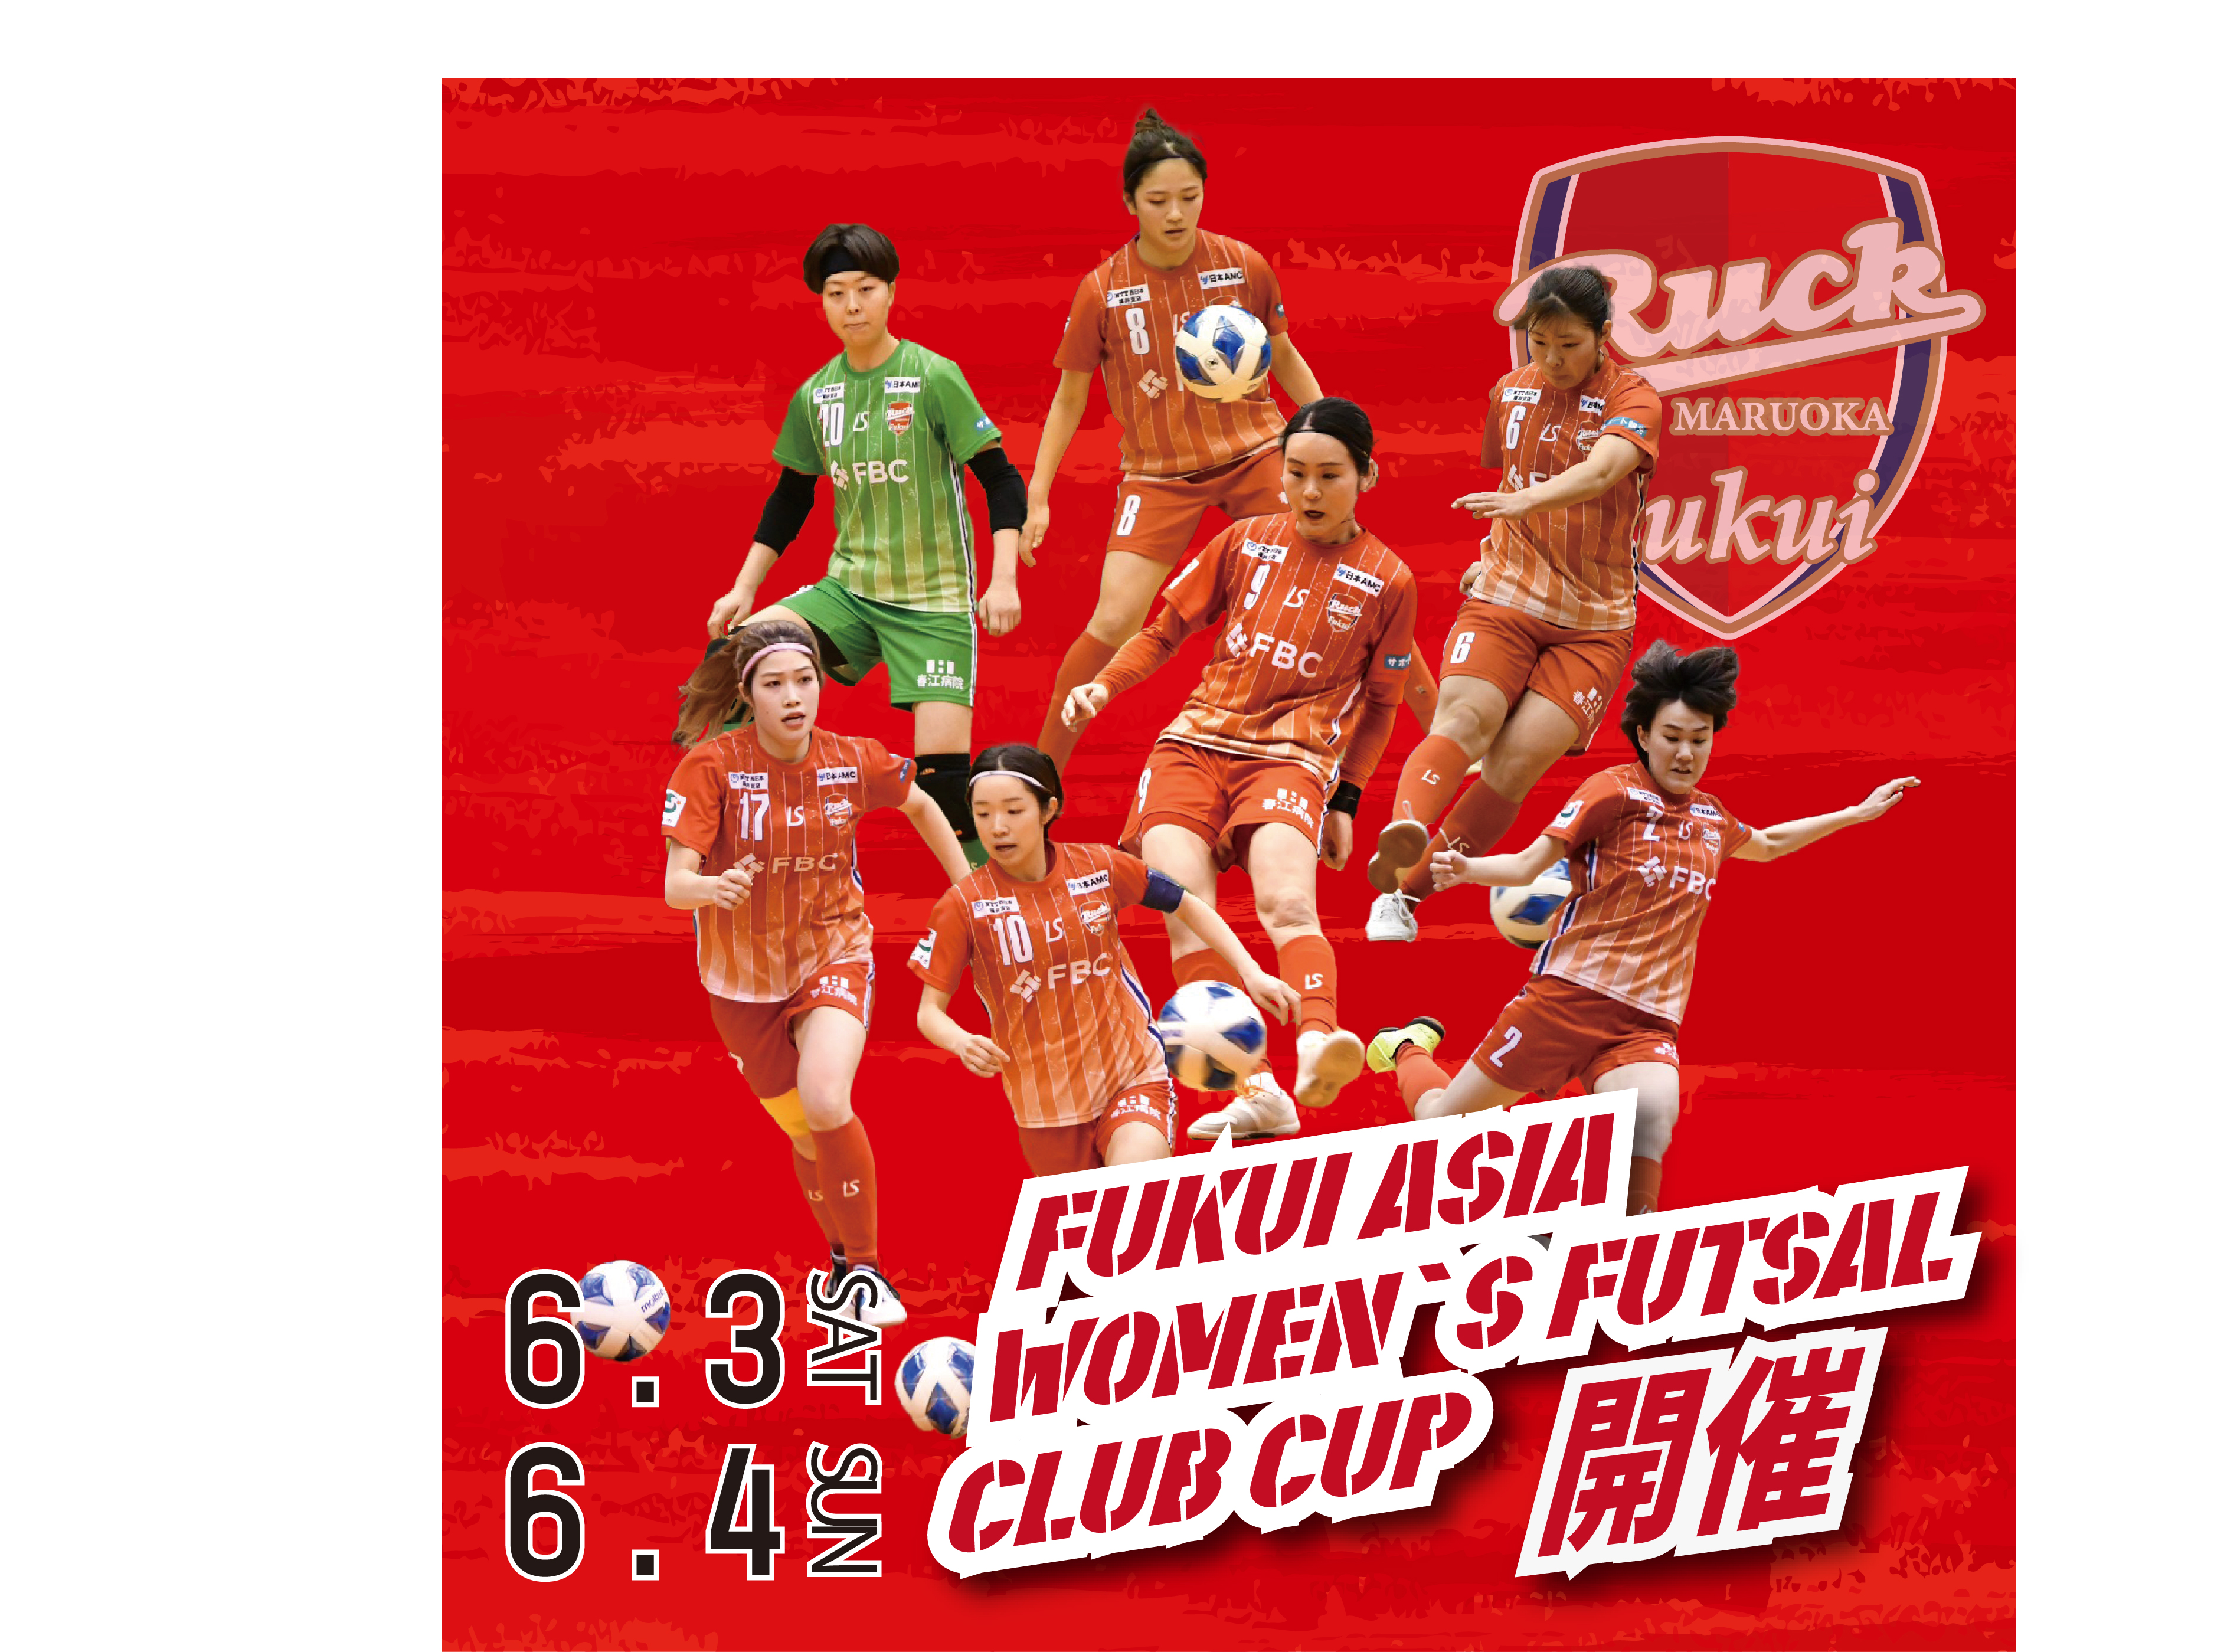 FUKUI  ASIA  WOMEN`S  FUTSAL  CLUB  CUP